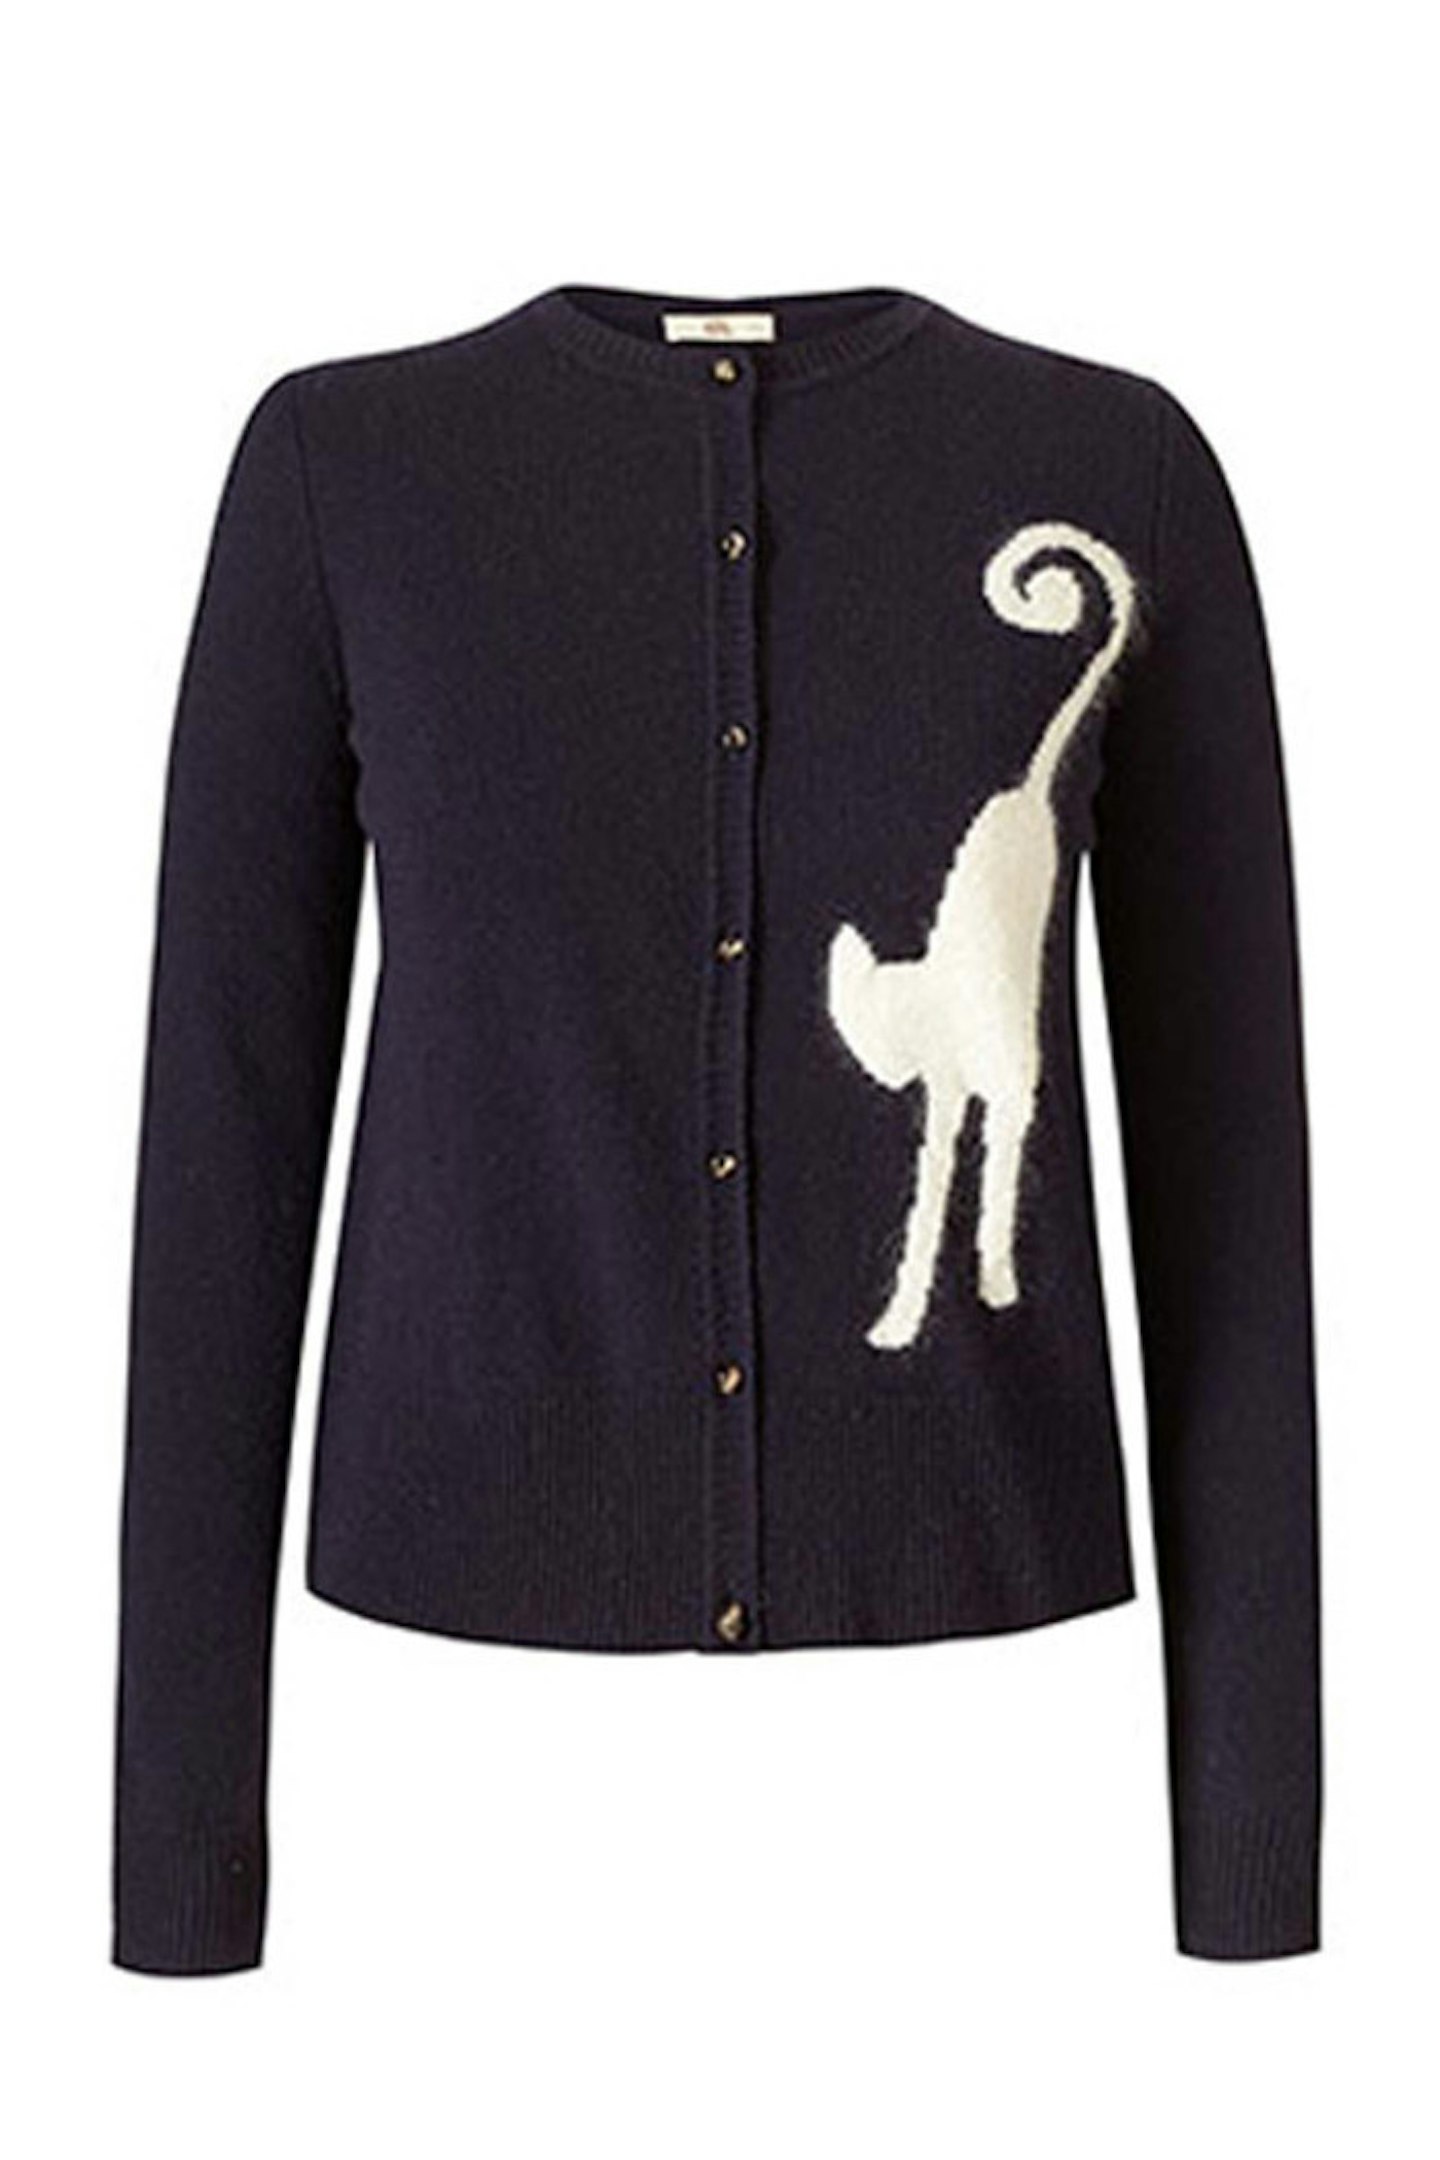 15. Navy wool cardigan, £159.20, Orla Kiely